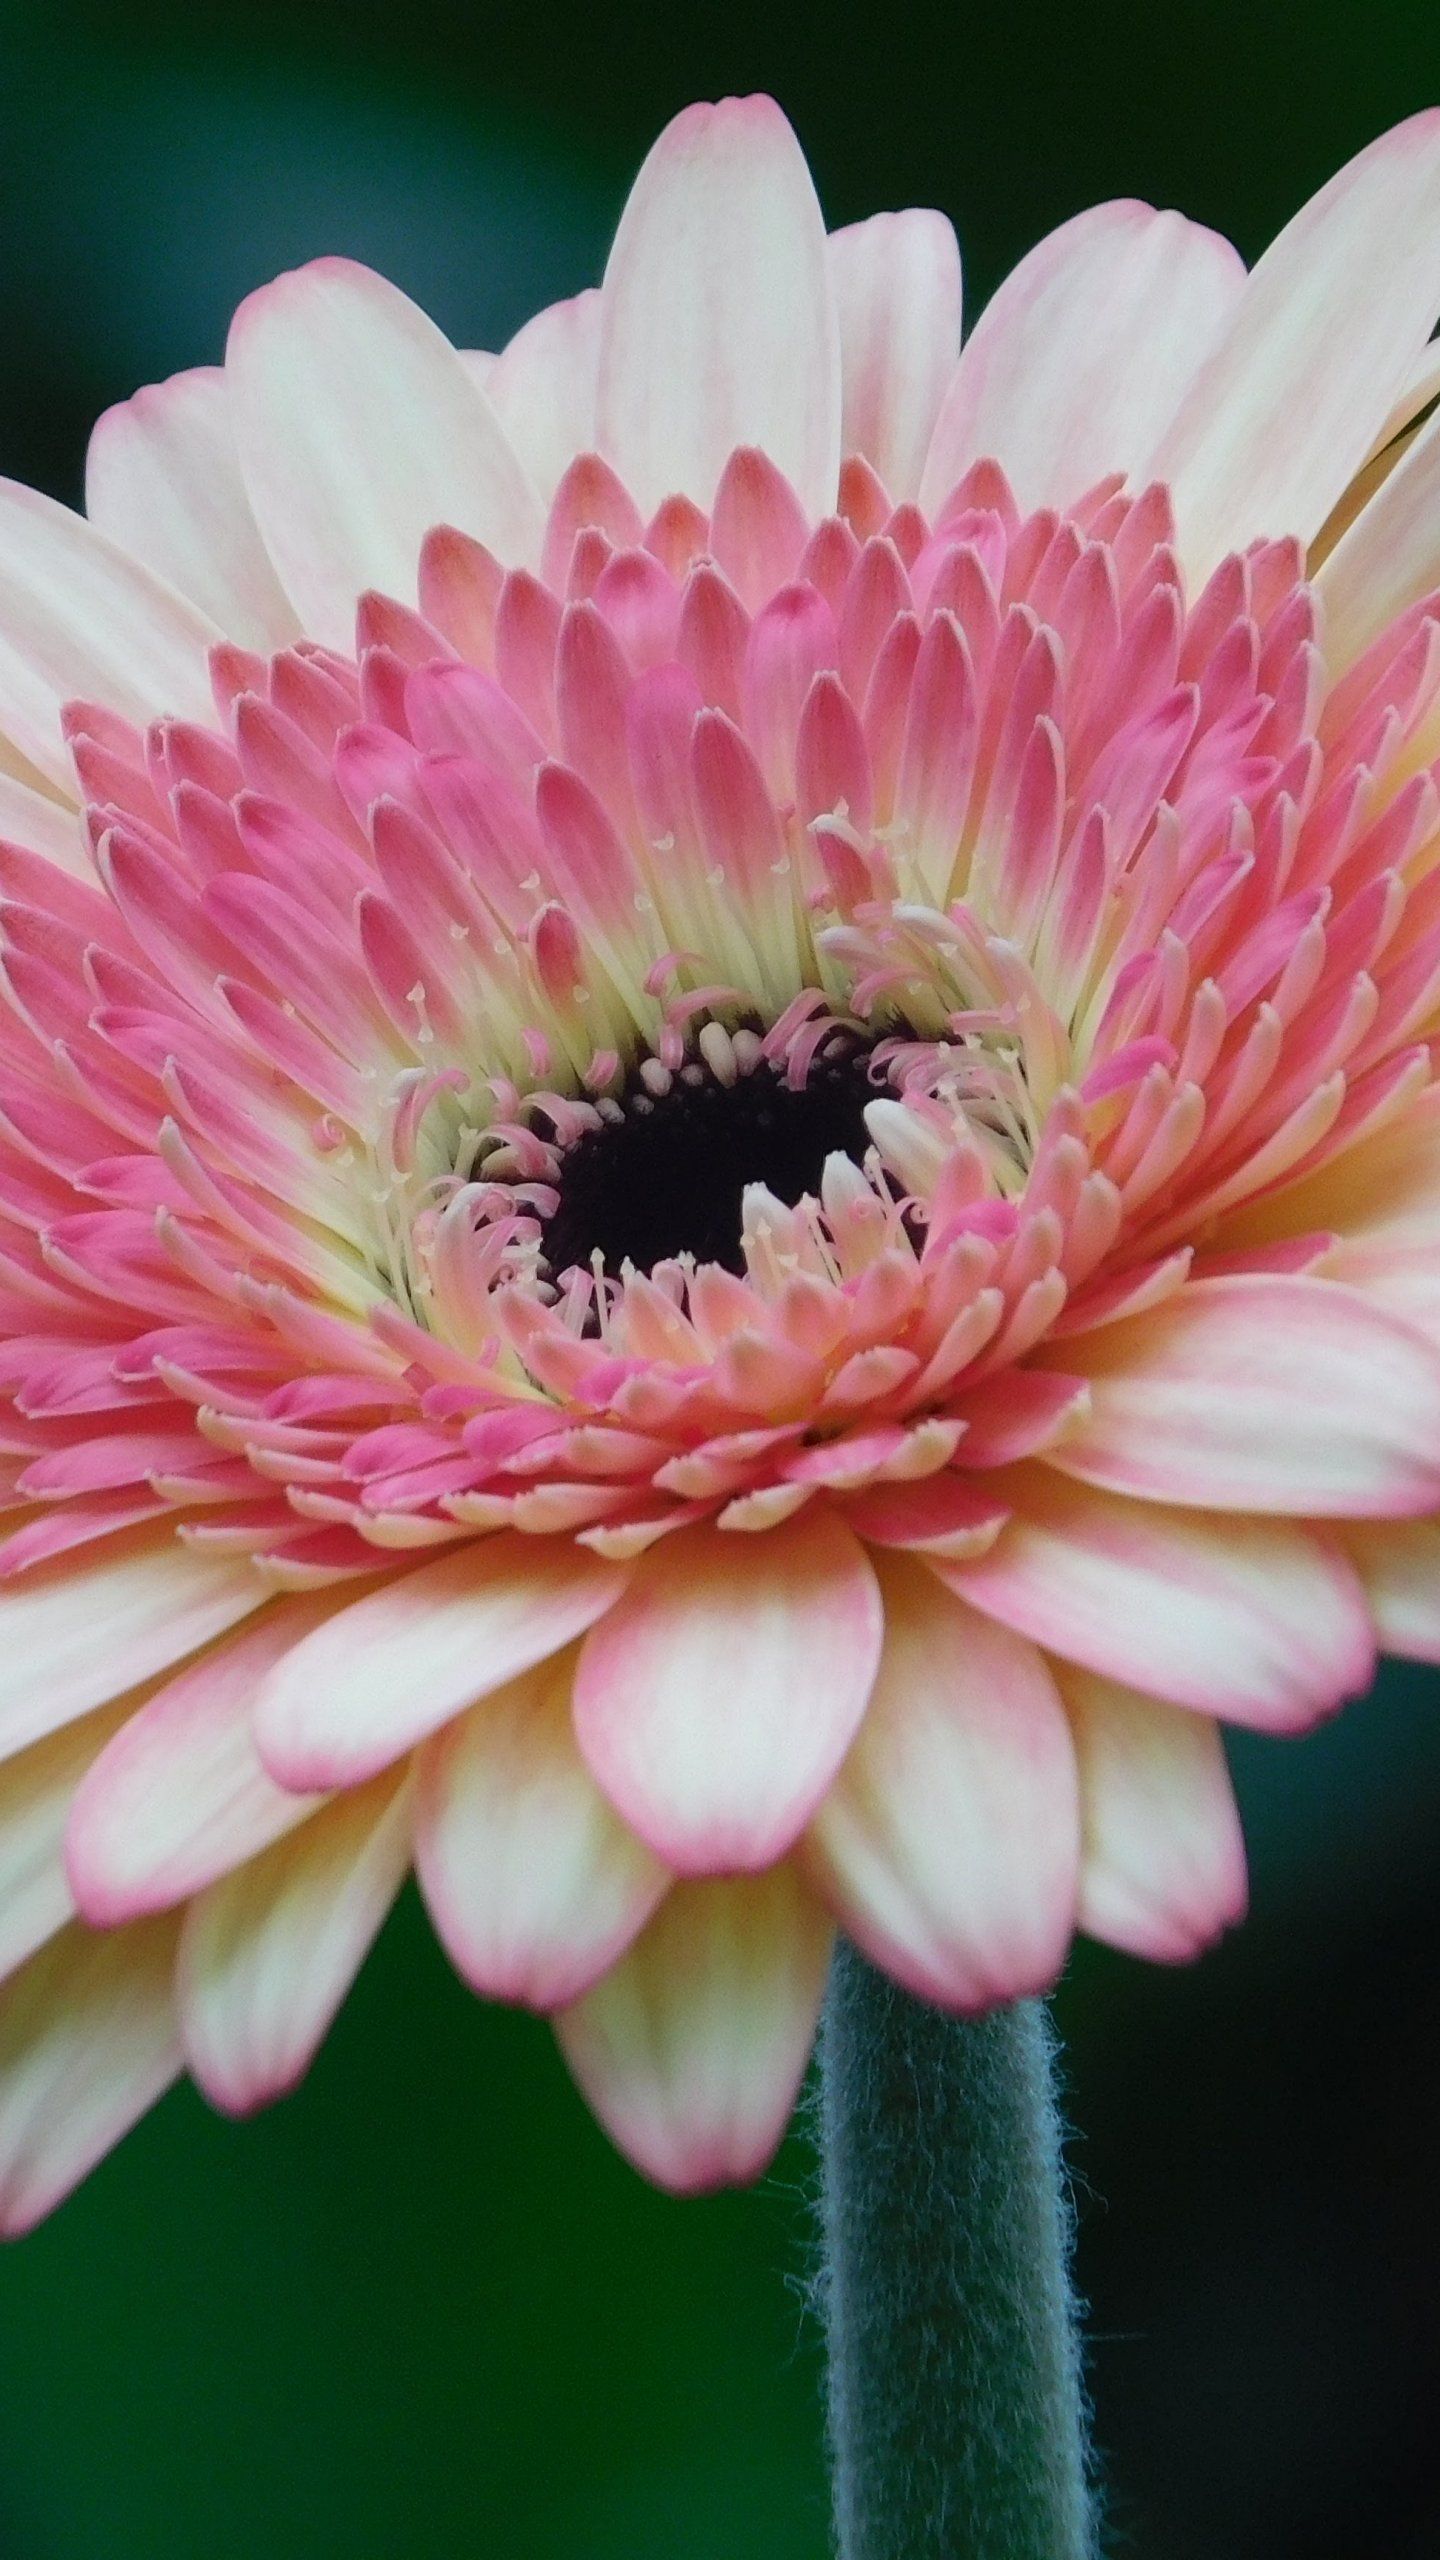 Pink Gerbera Daisy Flower Wallpaper, Android & Desktop Background. HD flower wallpaper, Flower wallpaper, Daisy flower photo